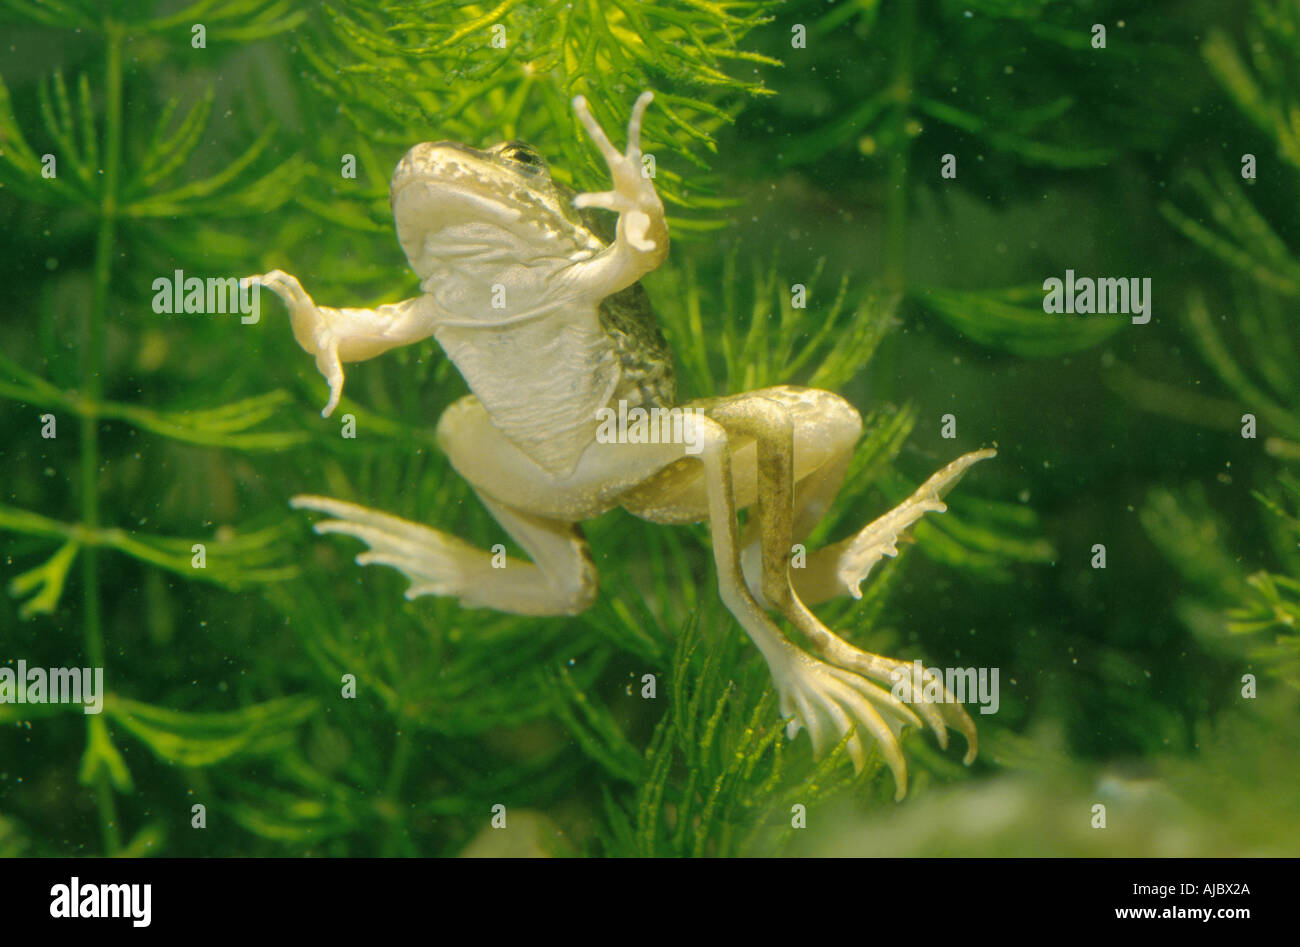 European edible frog (Rana esculenta), mutation with four legs, swimming in water Stock Photo